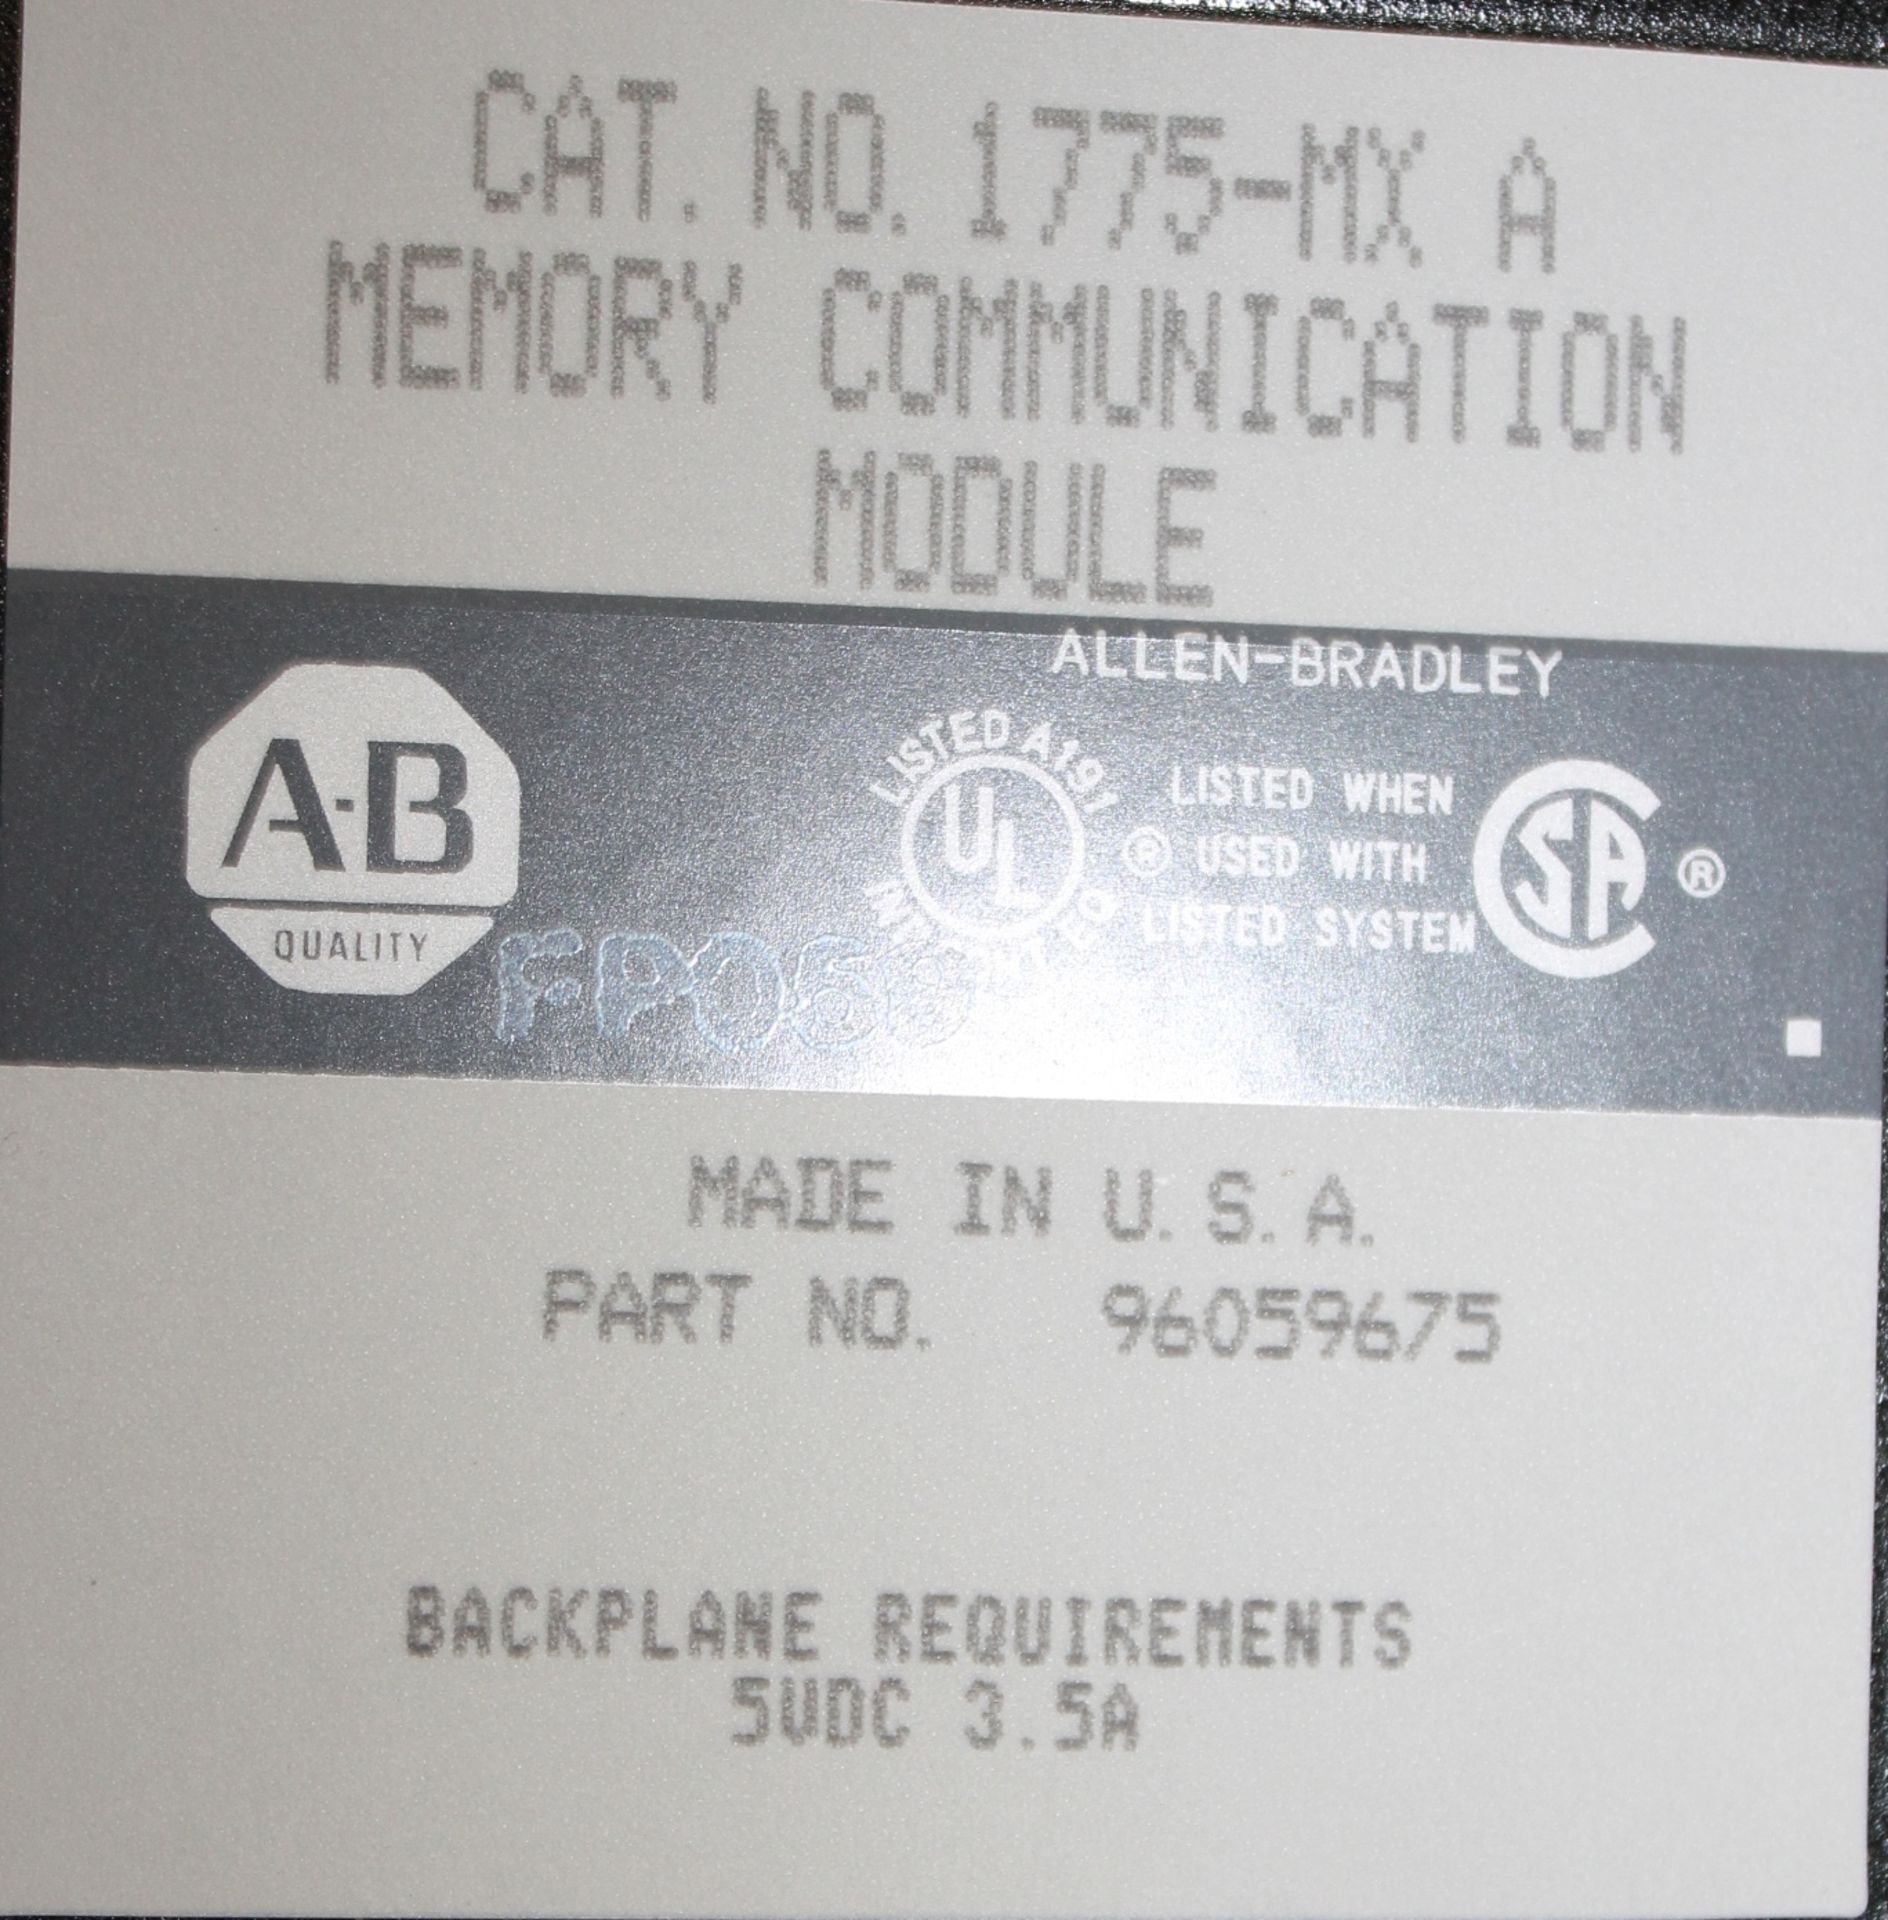 ALLEN BRADLEY 1775-MX MEMORY COMMUNICATION MODULE, CAT: 1775-MX A, 5 VDC, 3.5A - Image 5 of 6